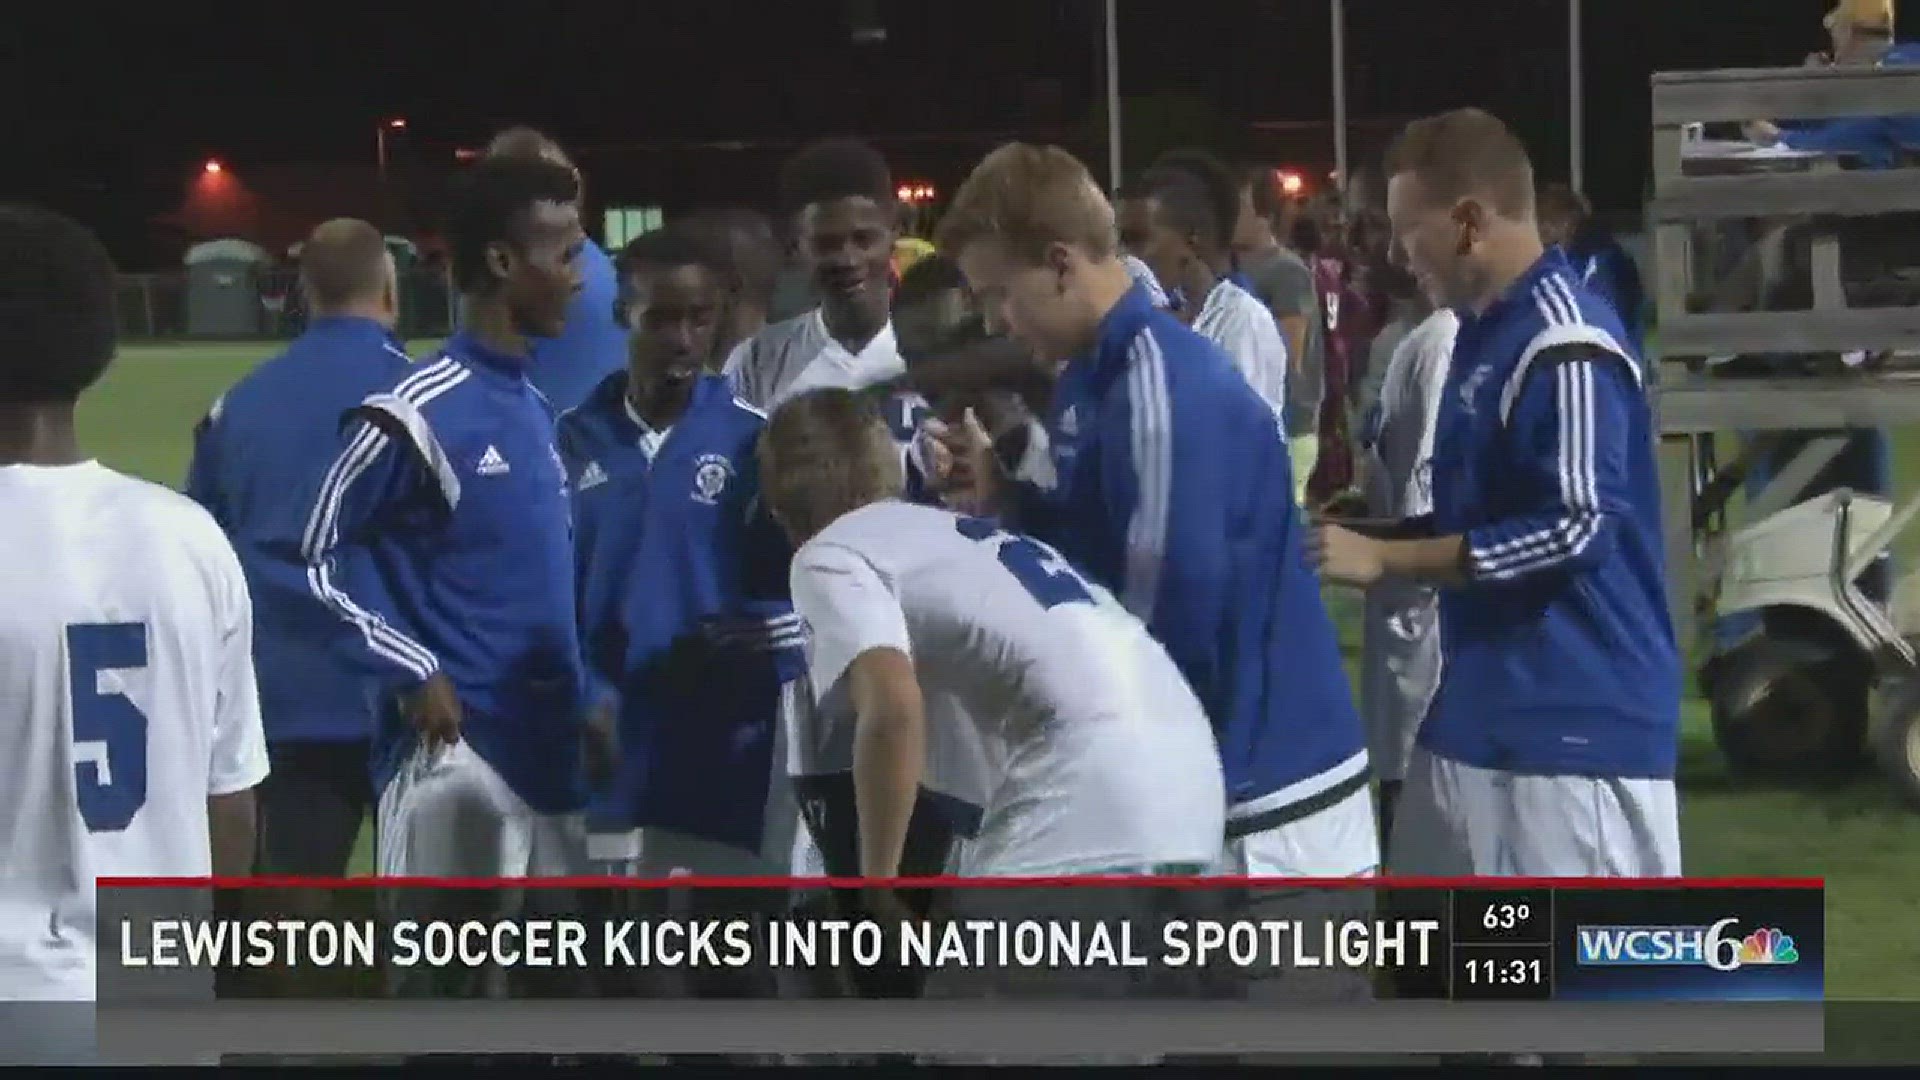 Lewiston soccer kicks into national spotlight